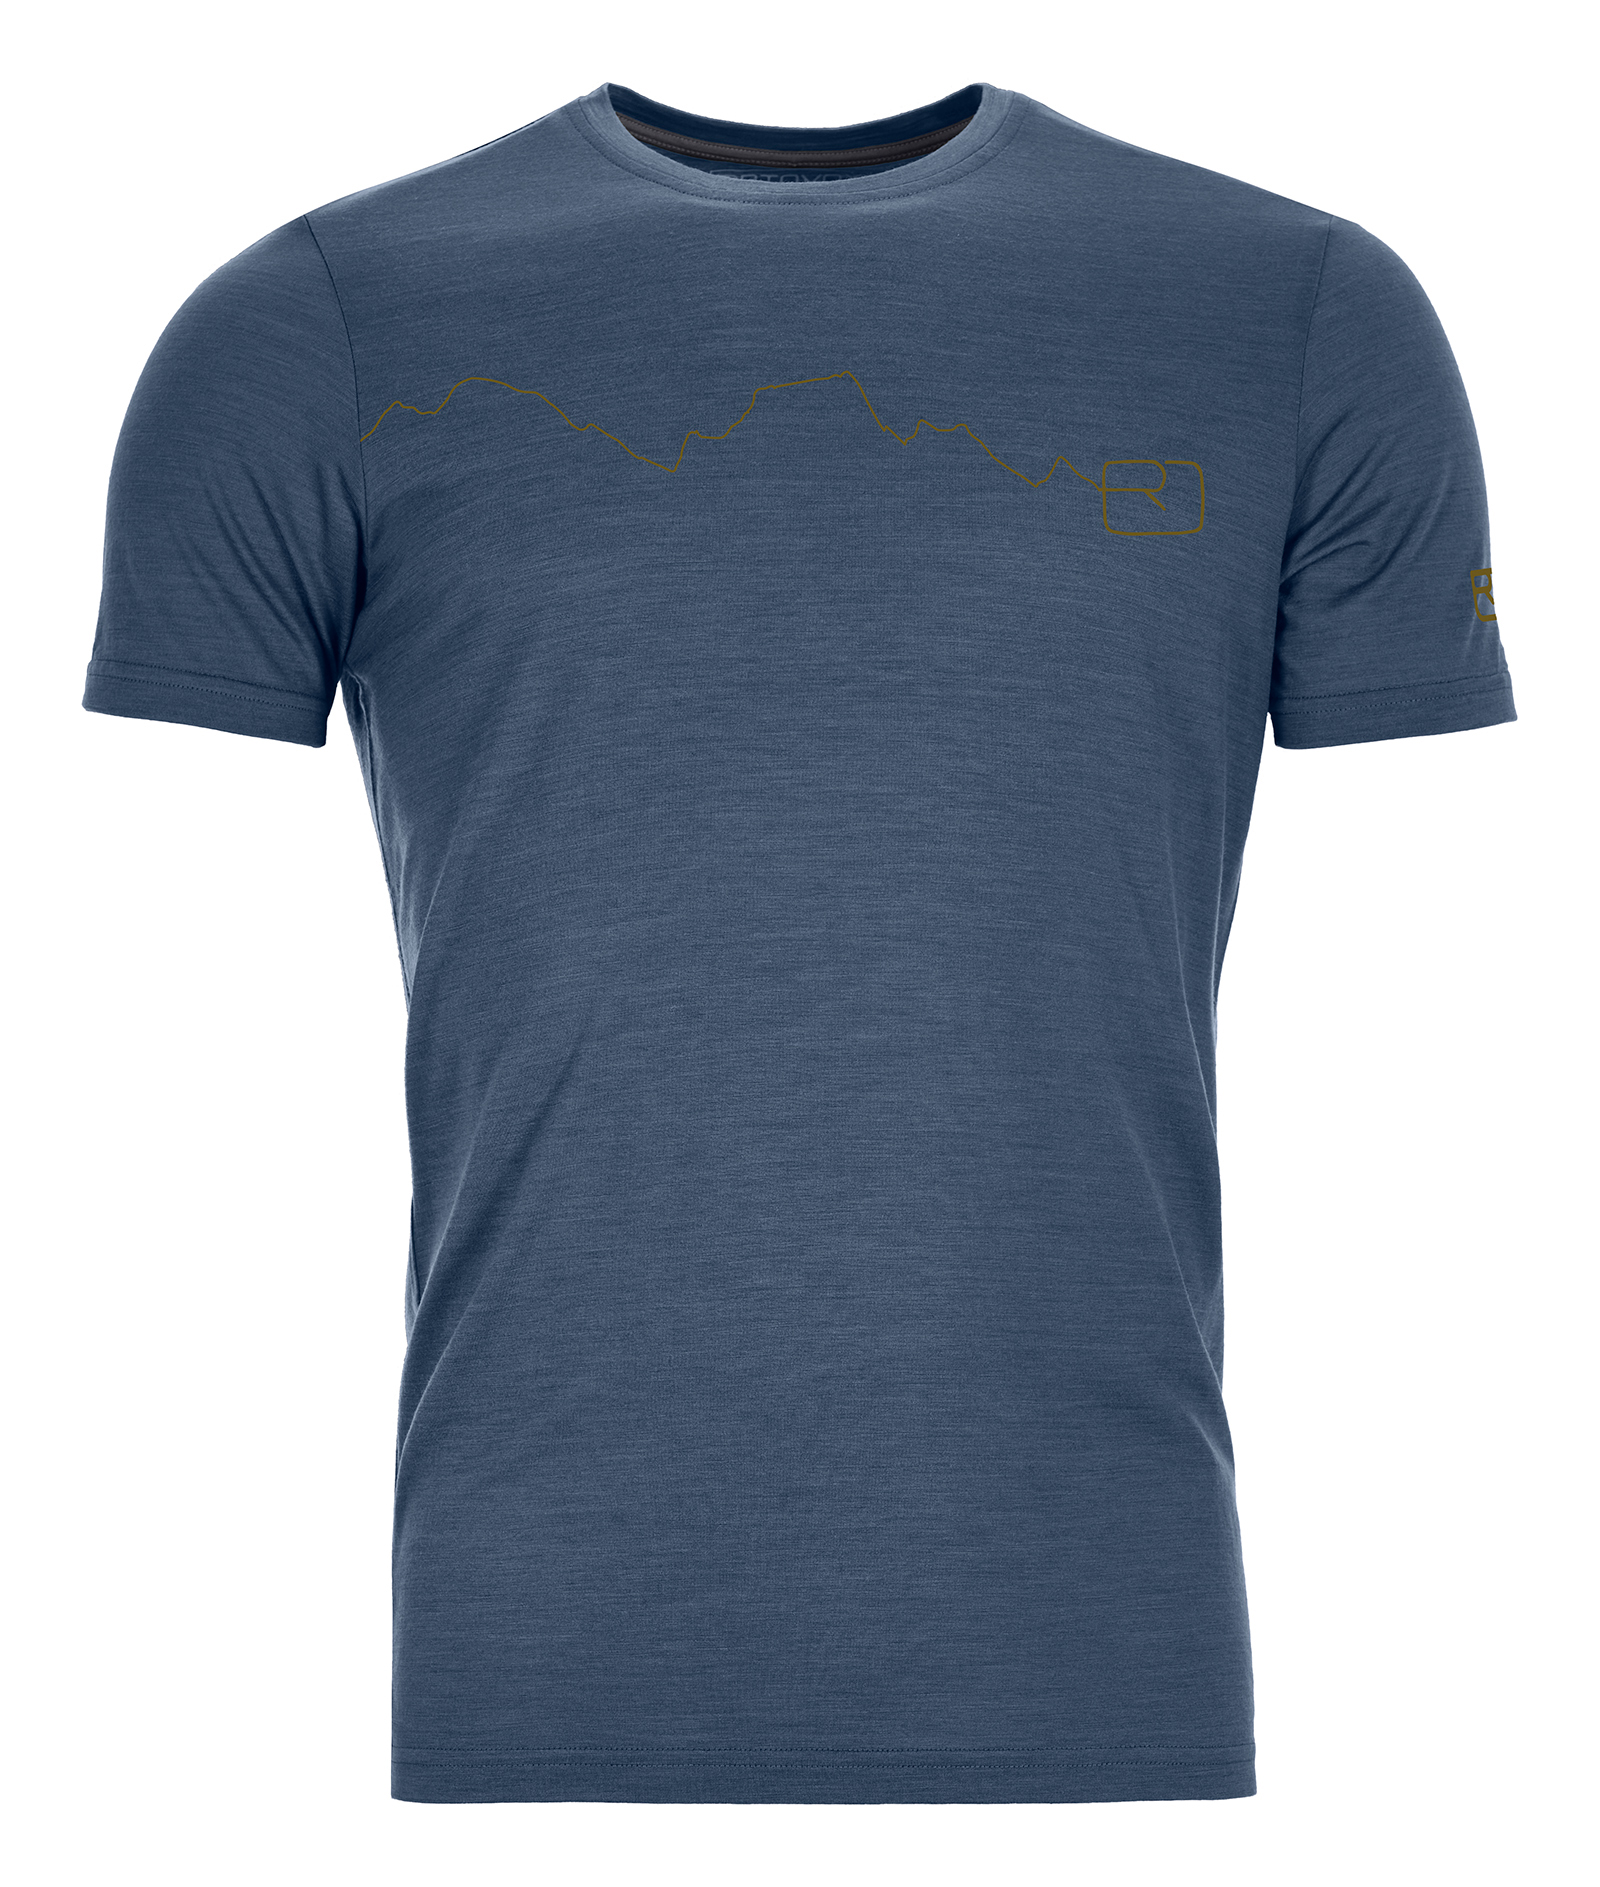 Ortovox 120 Tec Mountain - Camiseta lana merino - Hombre